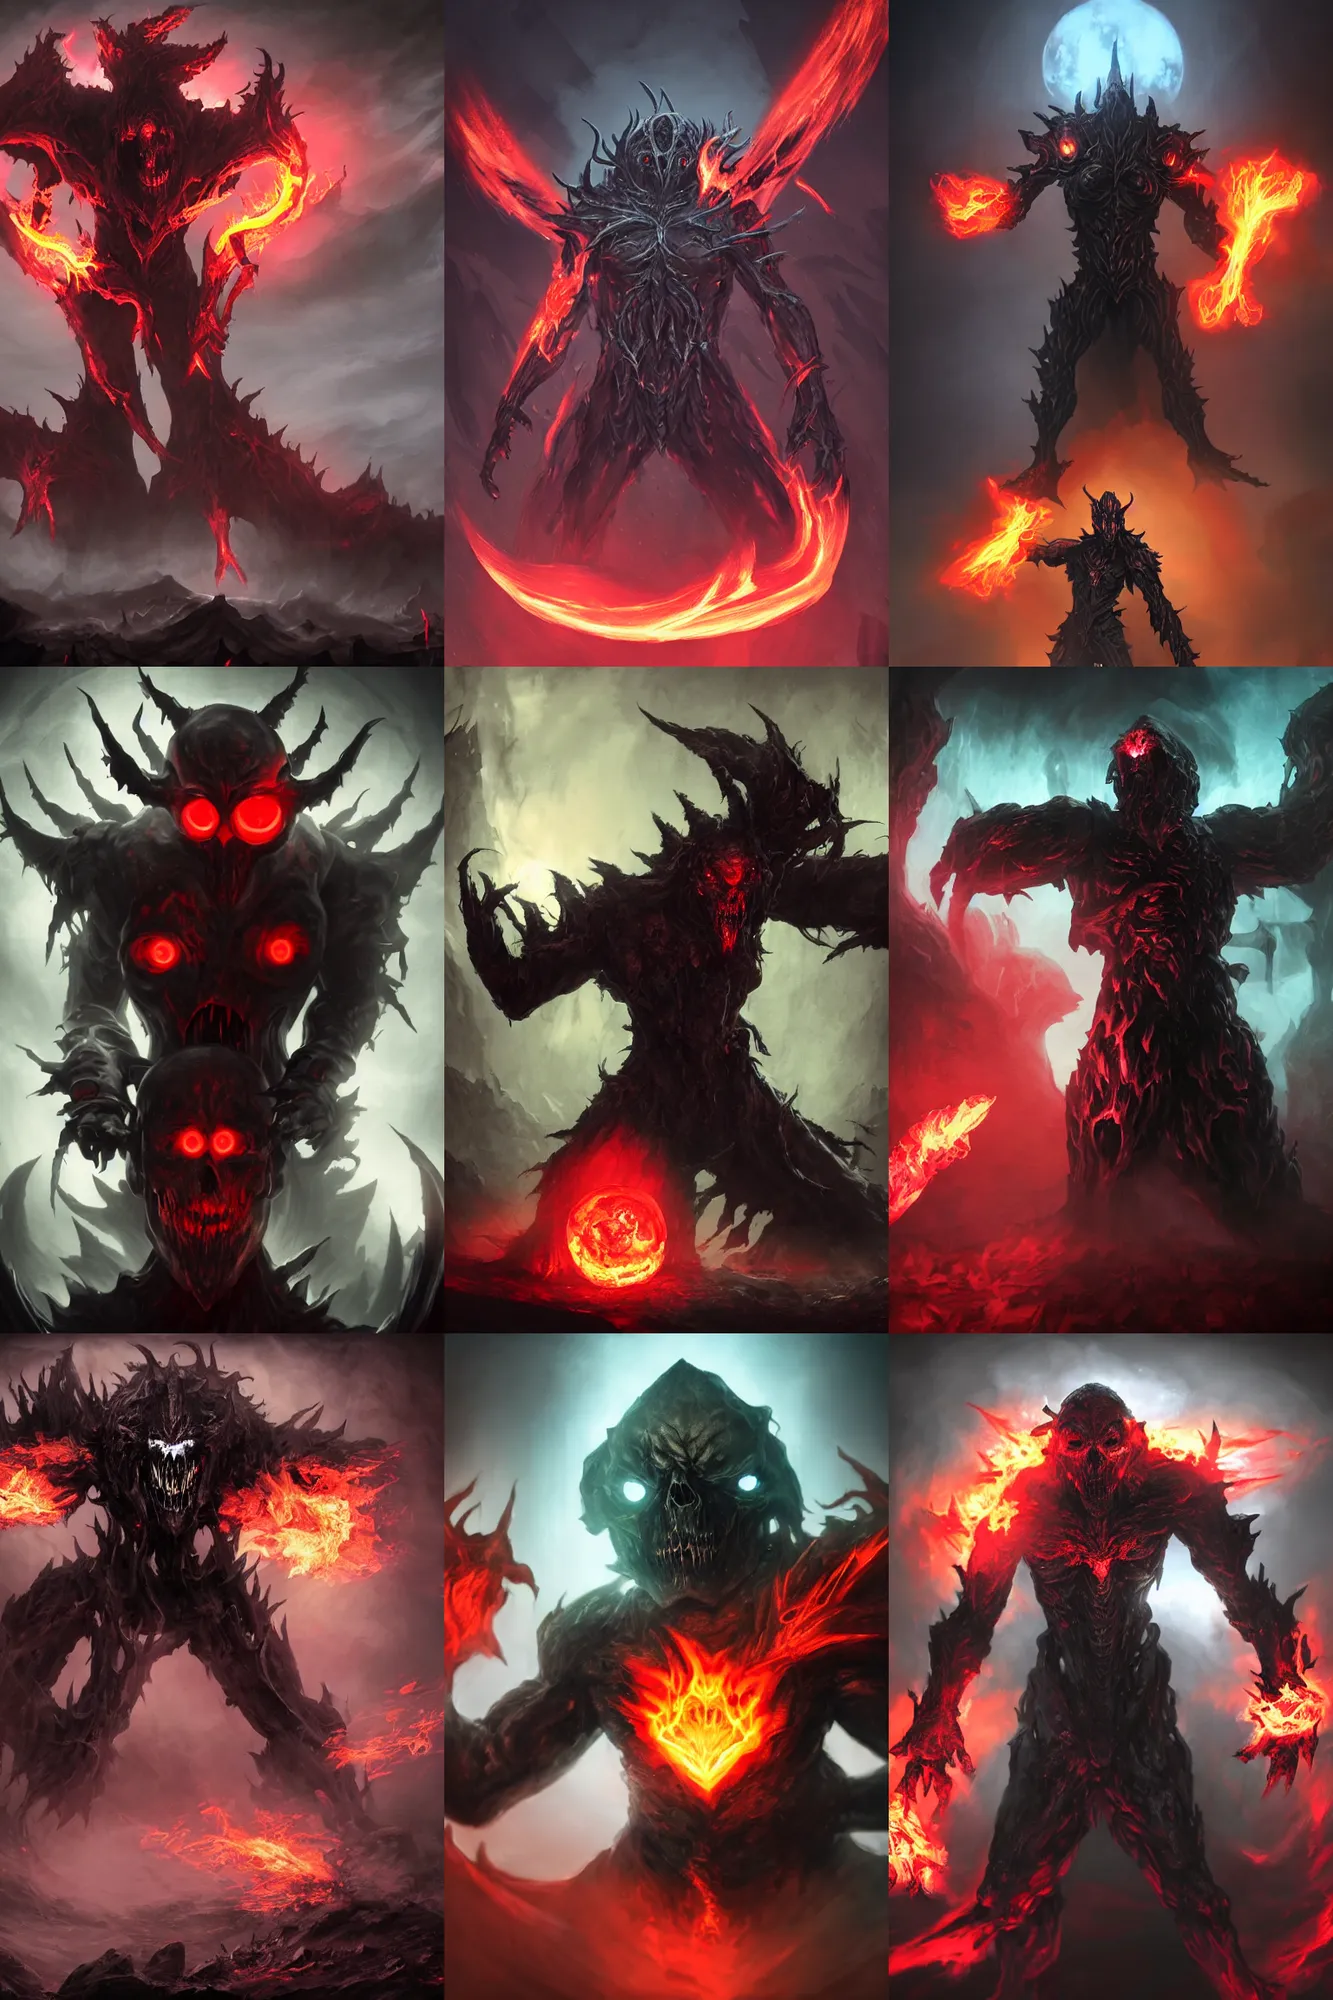 humanoid monsters of legend